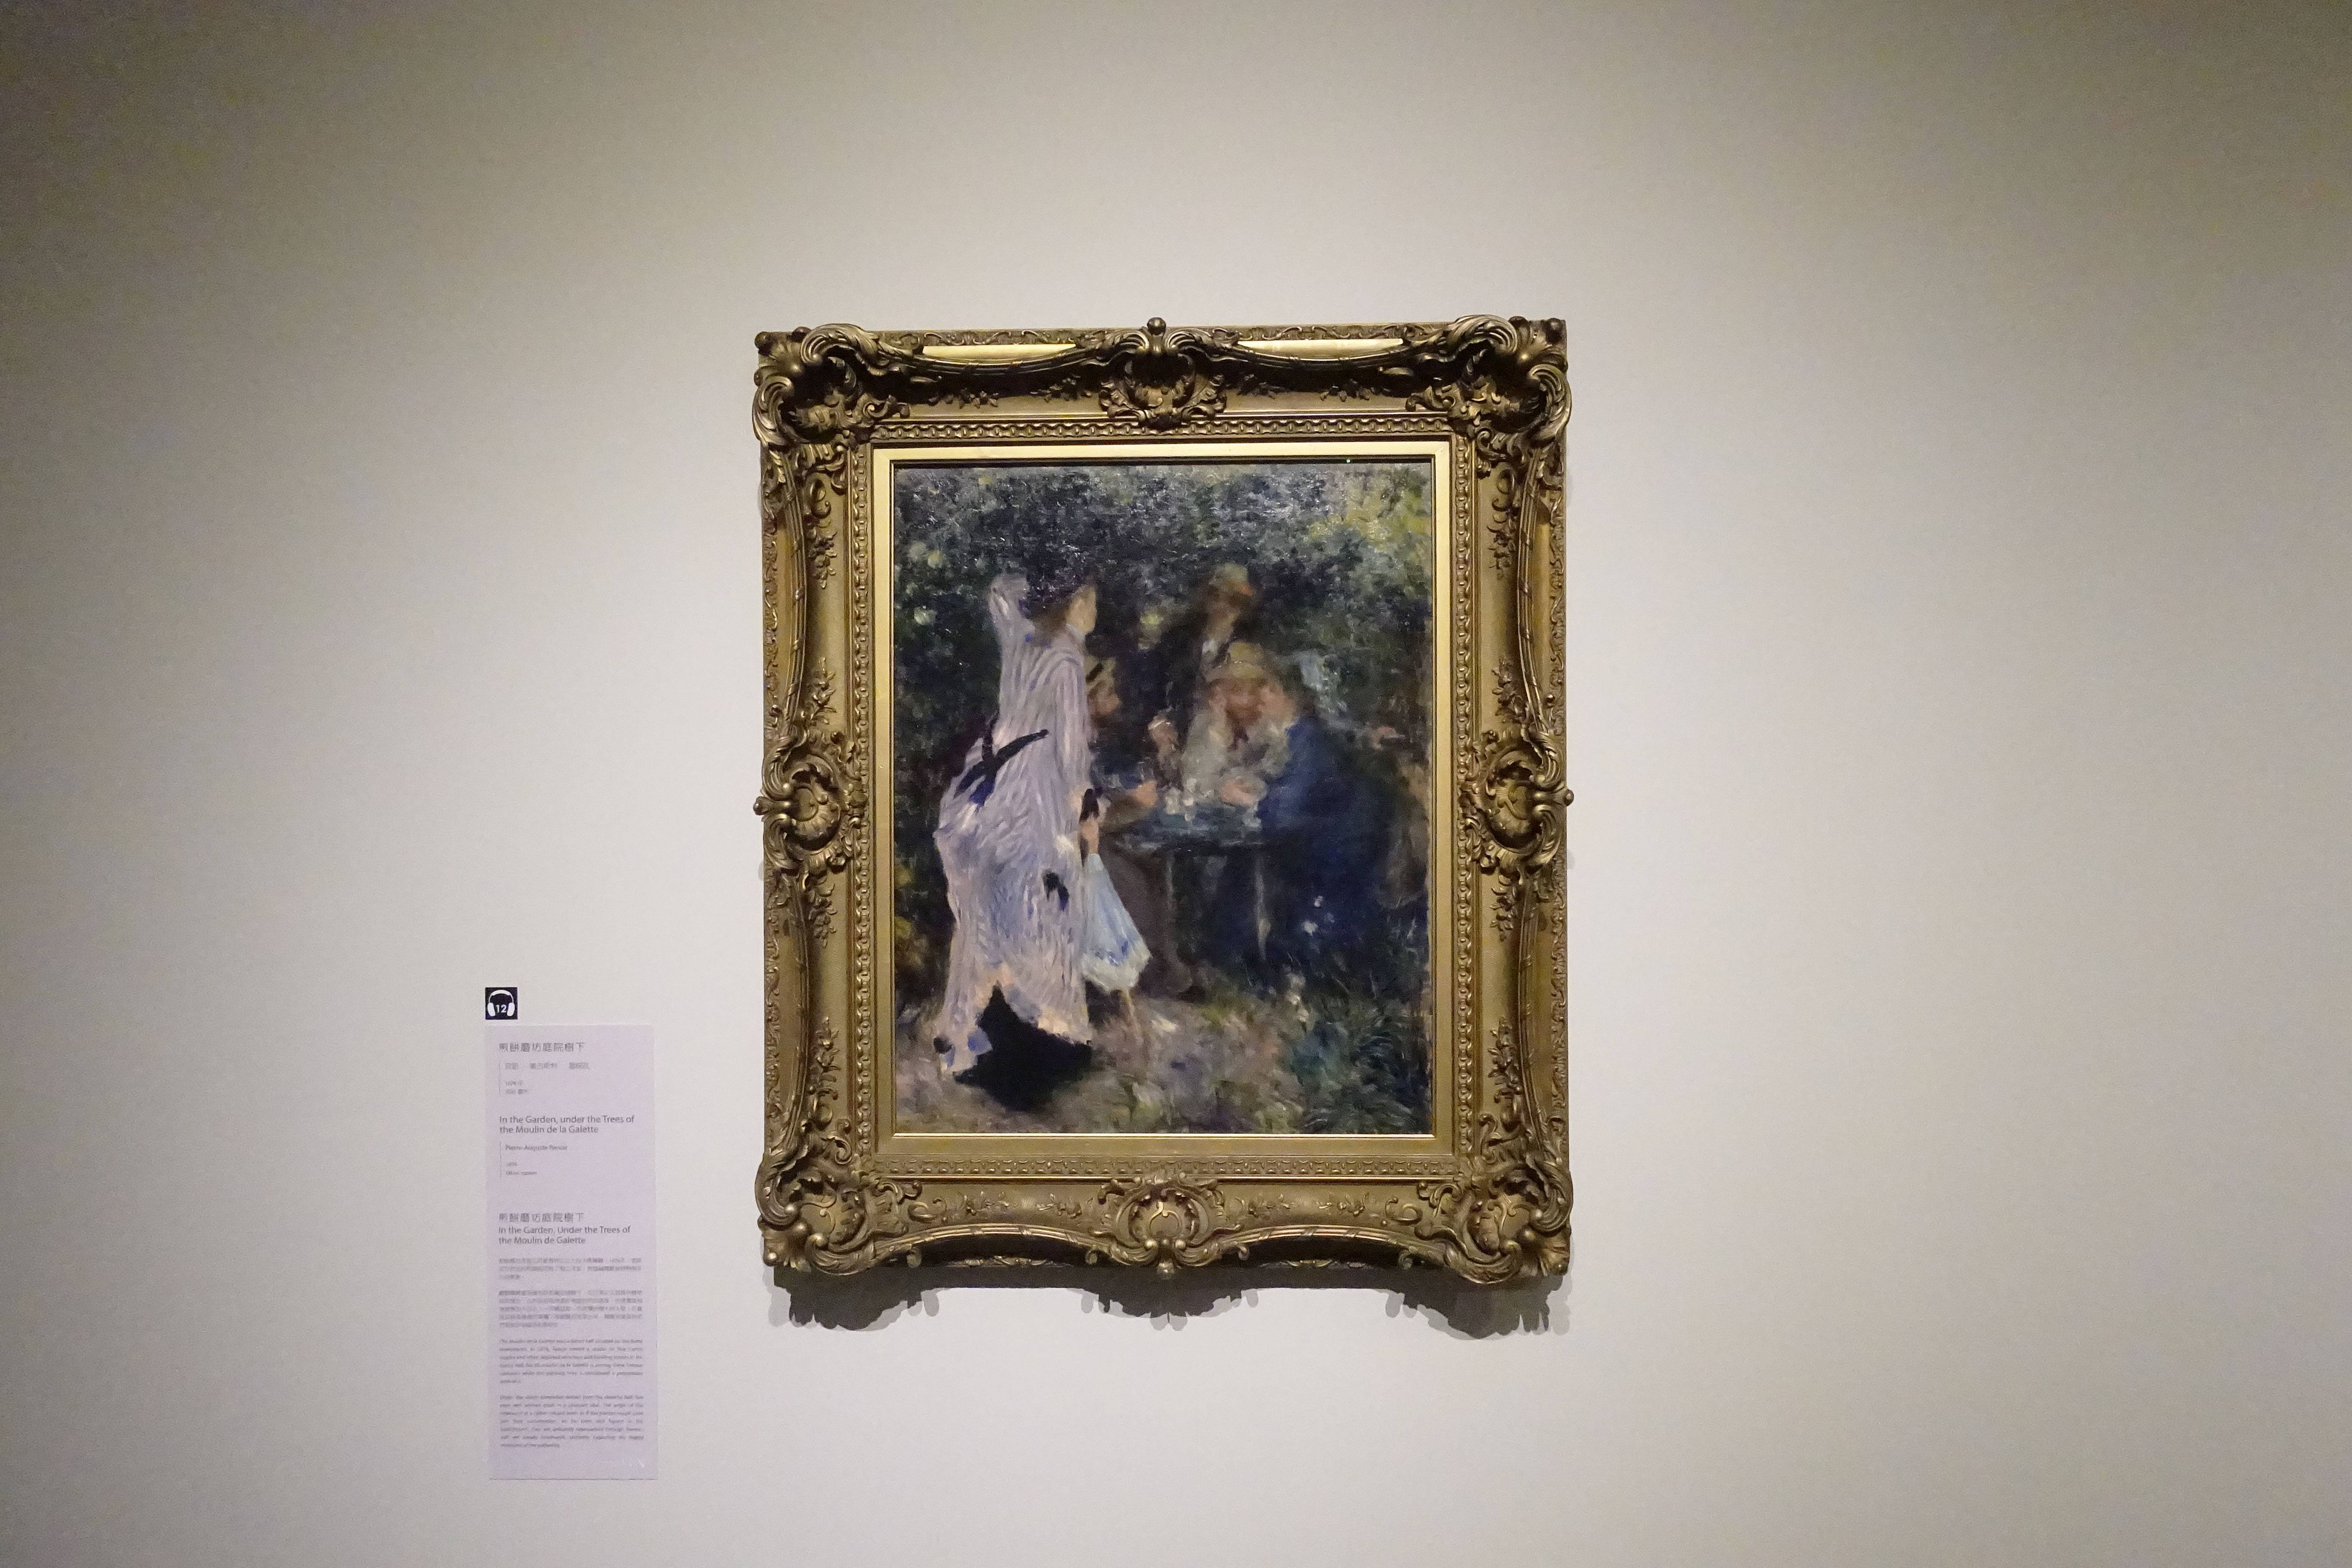 皮耶-奧古斯特．雷諾瓦 Pierre-Auguste Renoir ，《煎餅磨坊庭院樹下 In the Garden, under the Trees of the Moulin de la Galette》，油彩、畫布 Oil on canvas，1876。